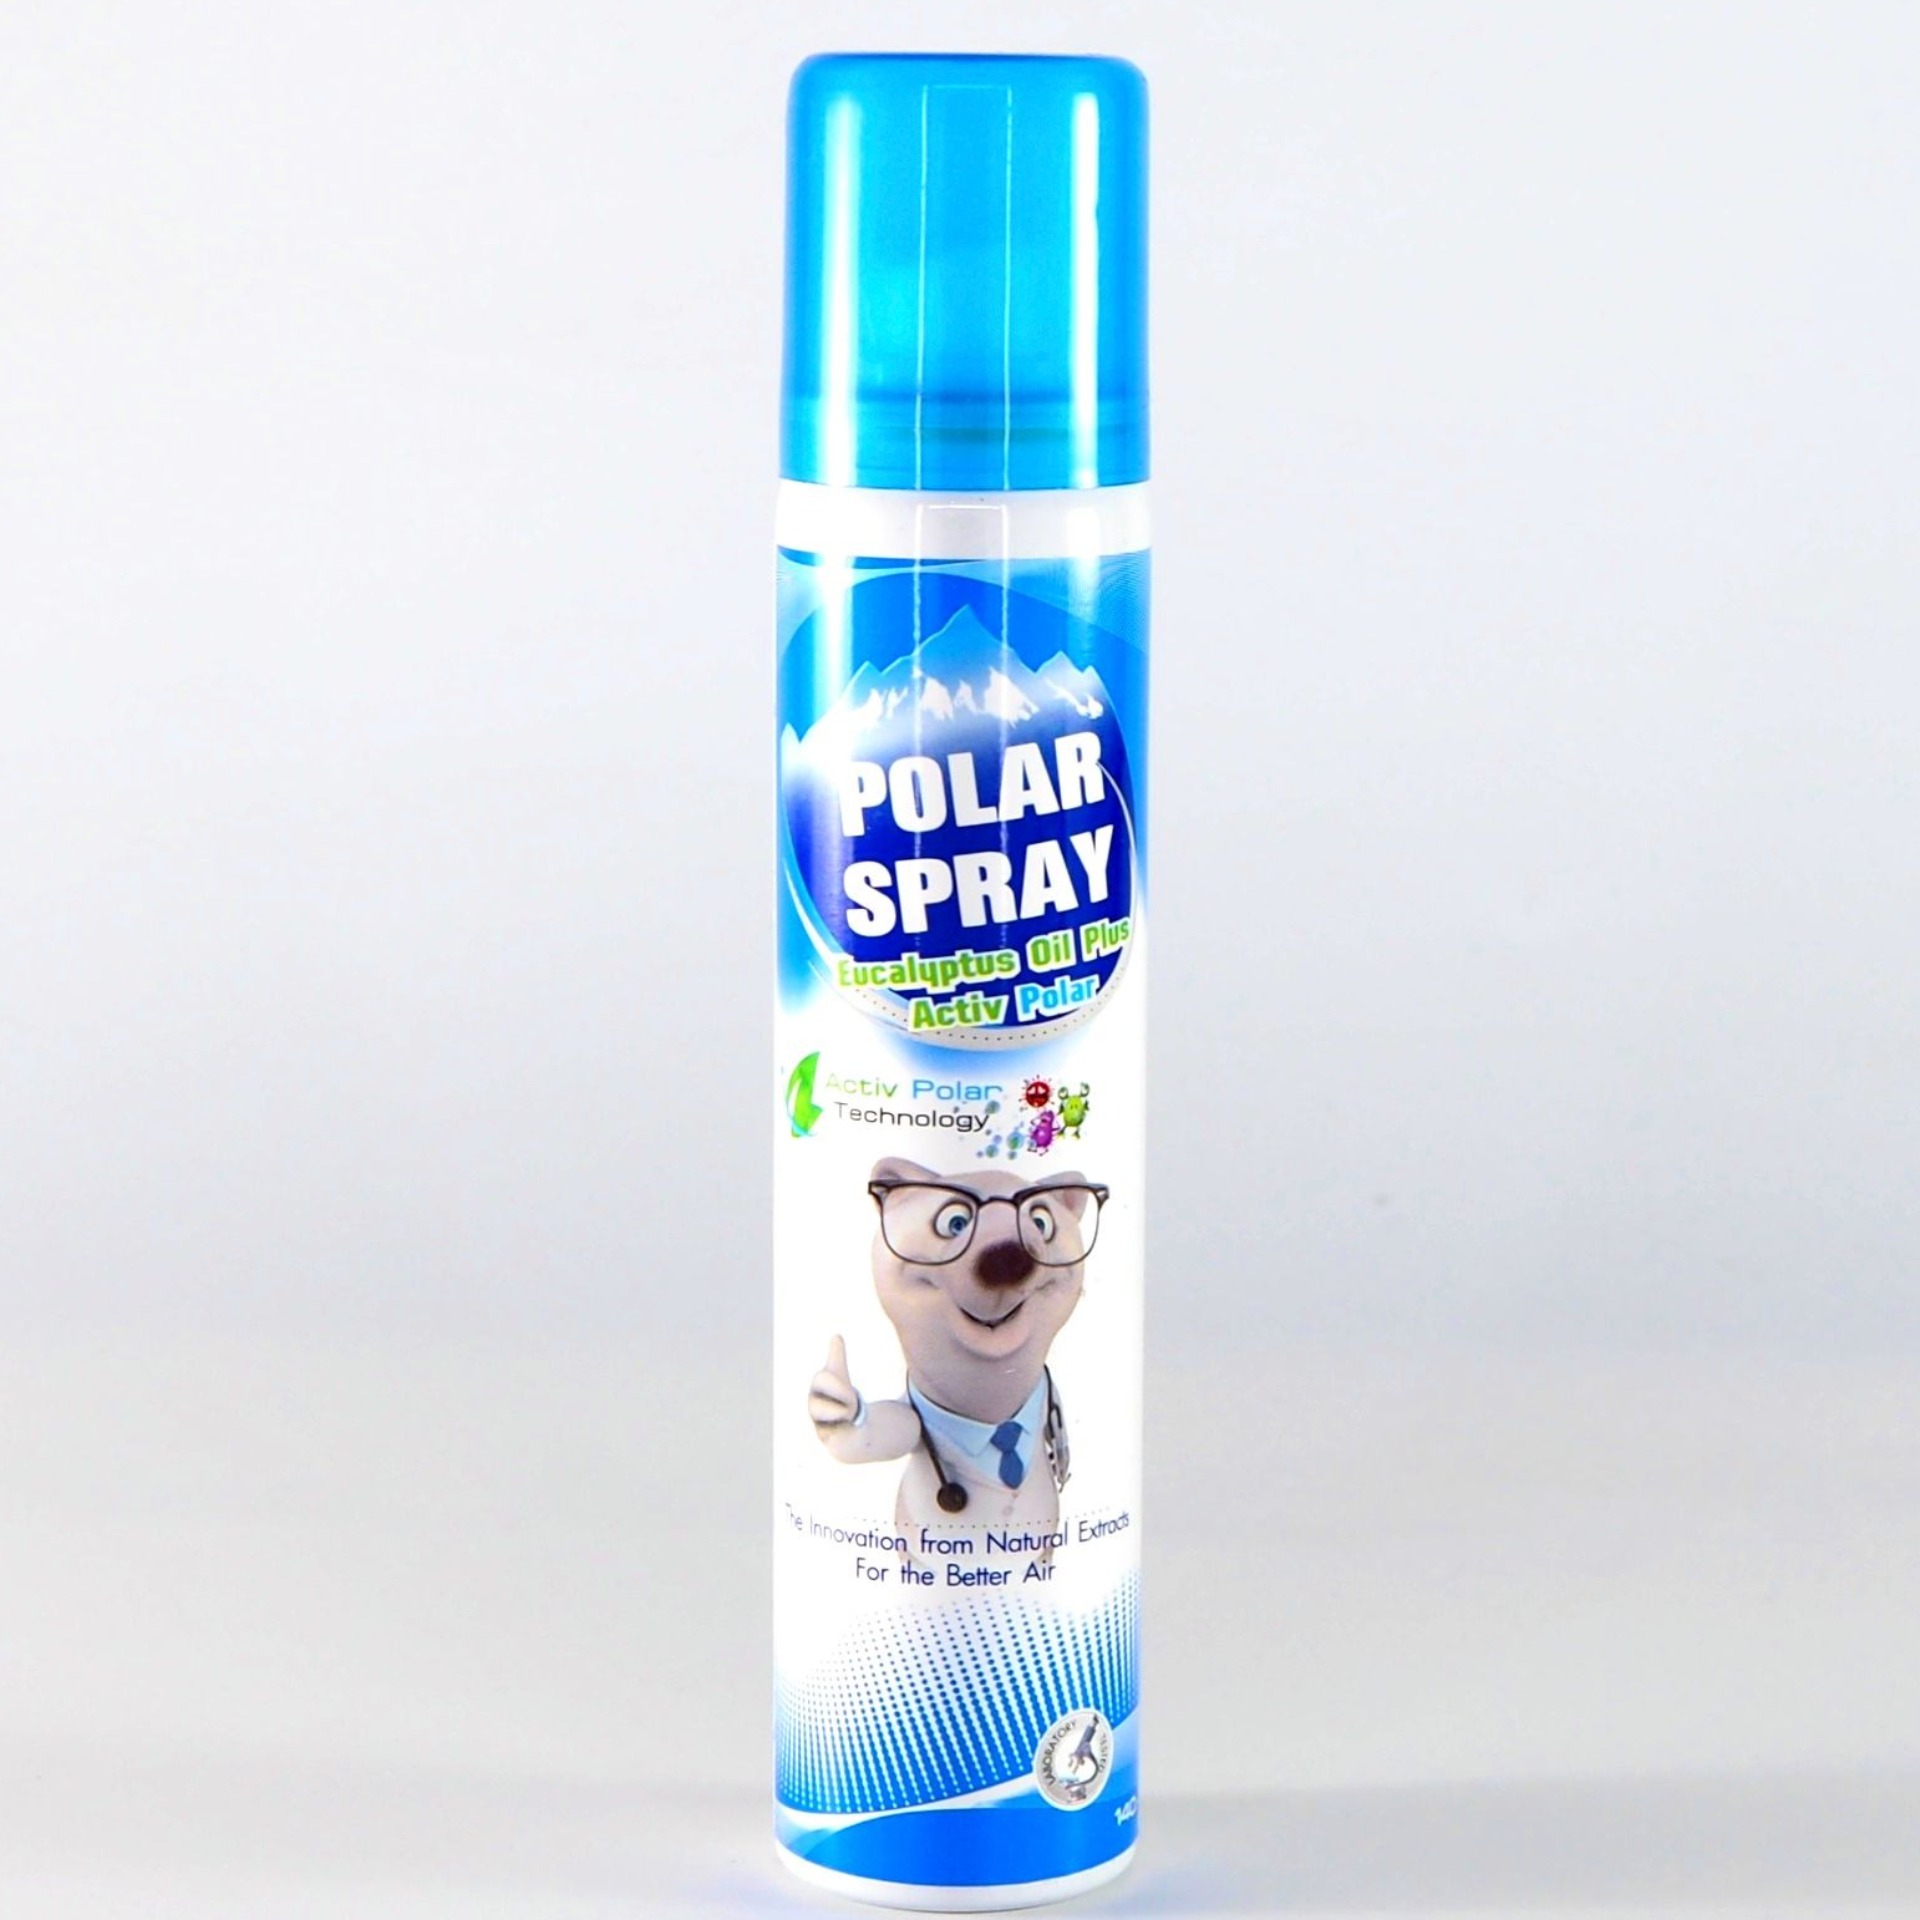 Polar Spray 80 mL Eucalyptus Spray สเปรย์ ปรับอากาศ ยูคาลิปตัส